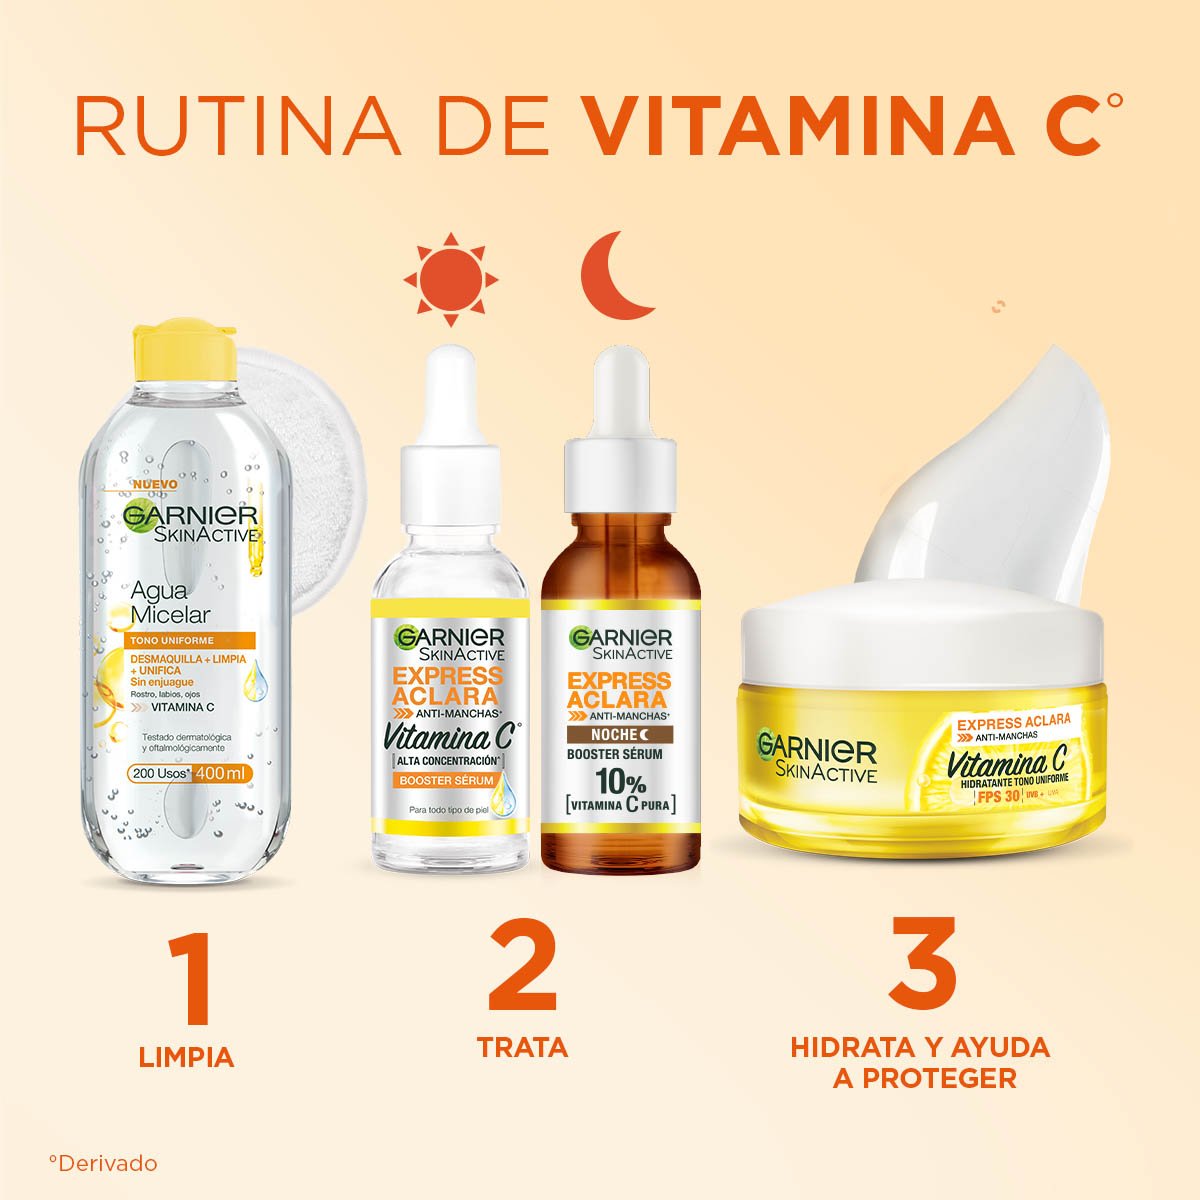 Rutina de vitamina C  1.- Limpia: Agua micelar 2.- Trata Sérum 3.- Hidrata y ayuda a proteger: Crema hidratante